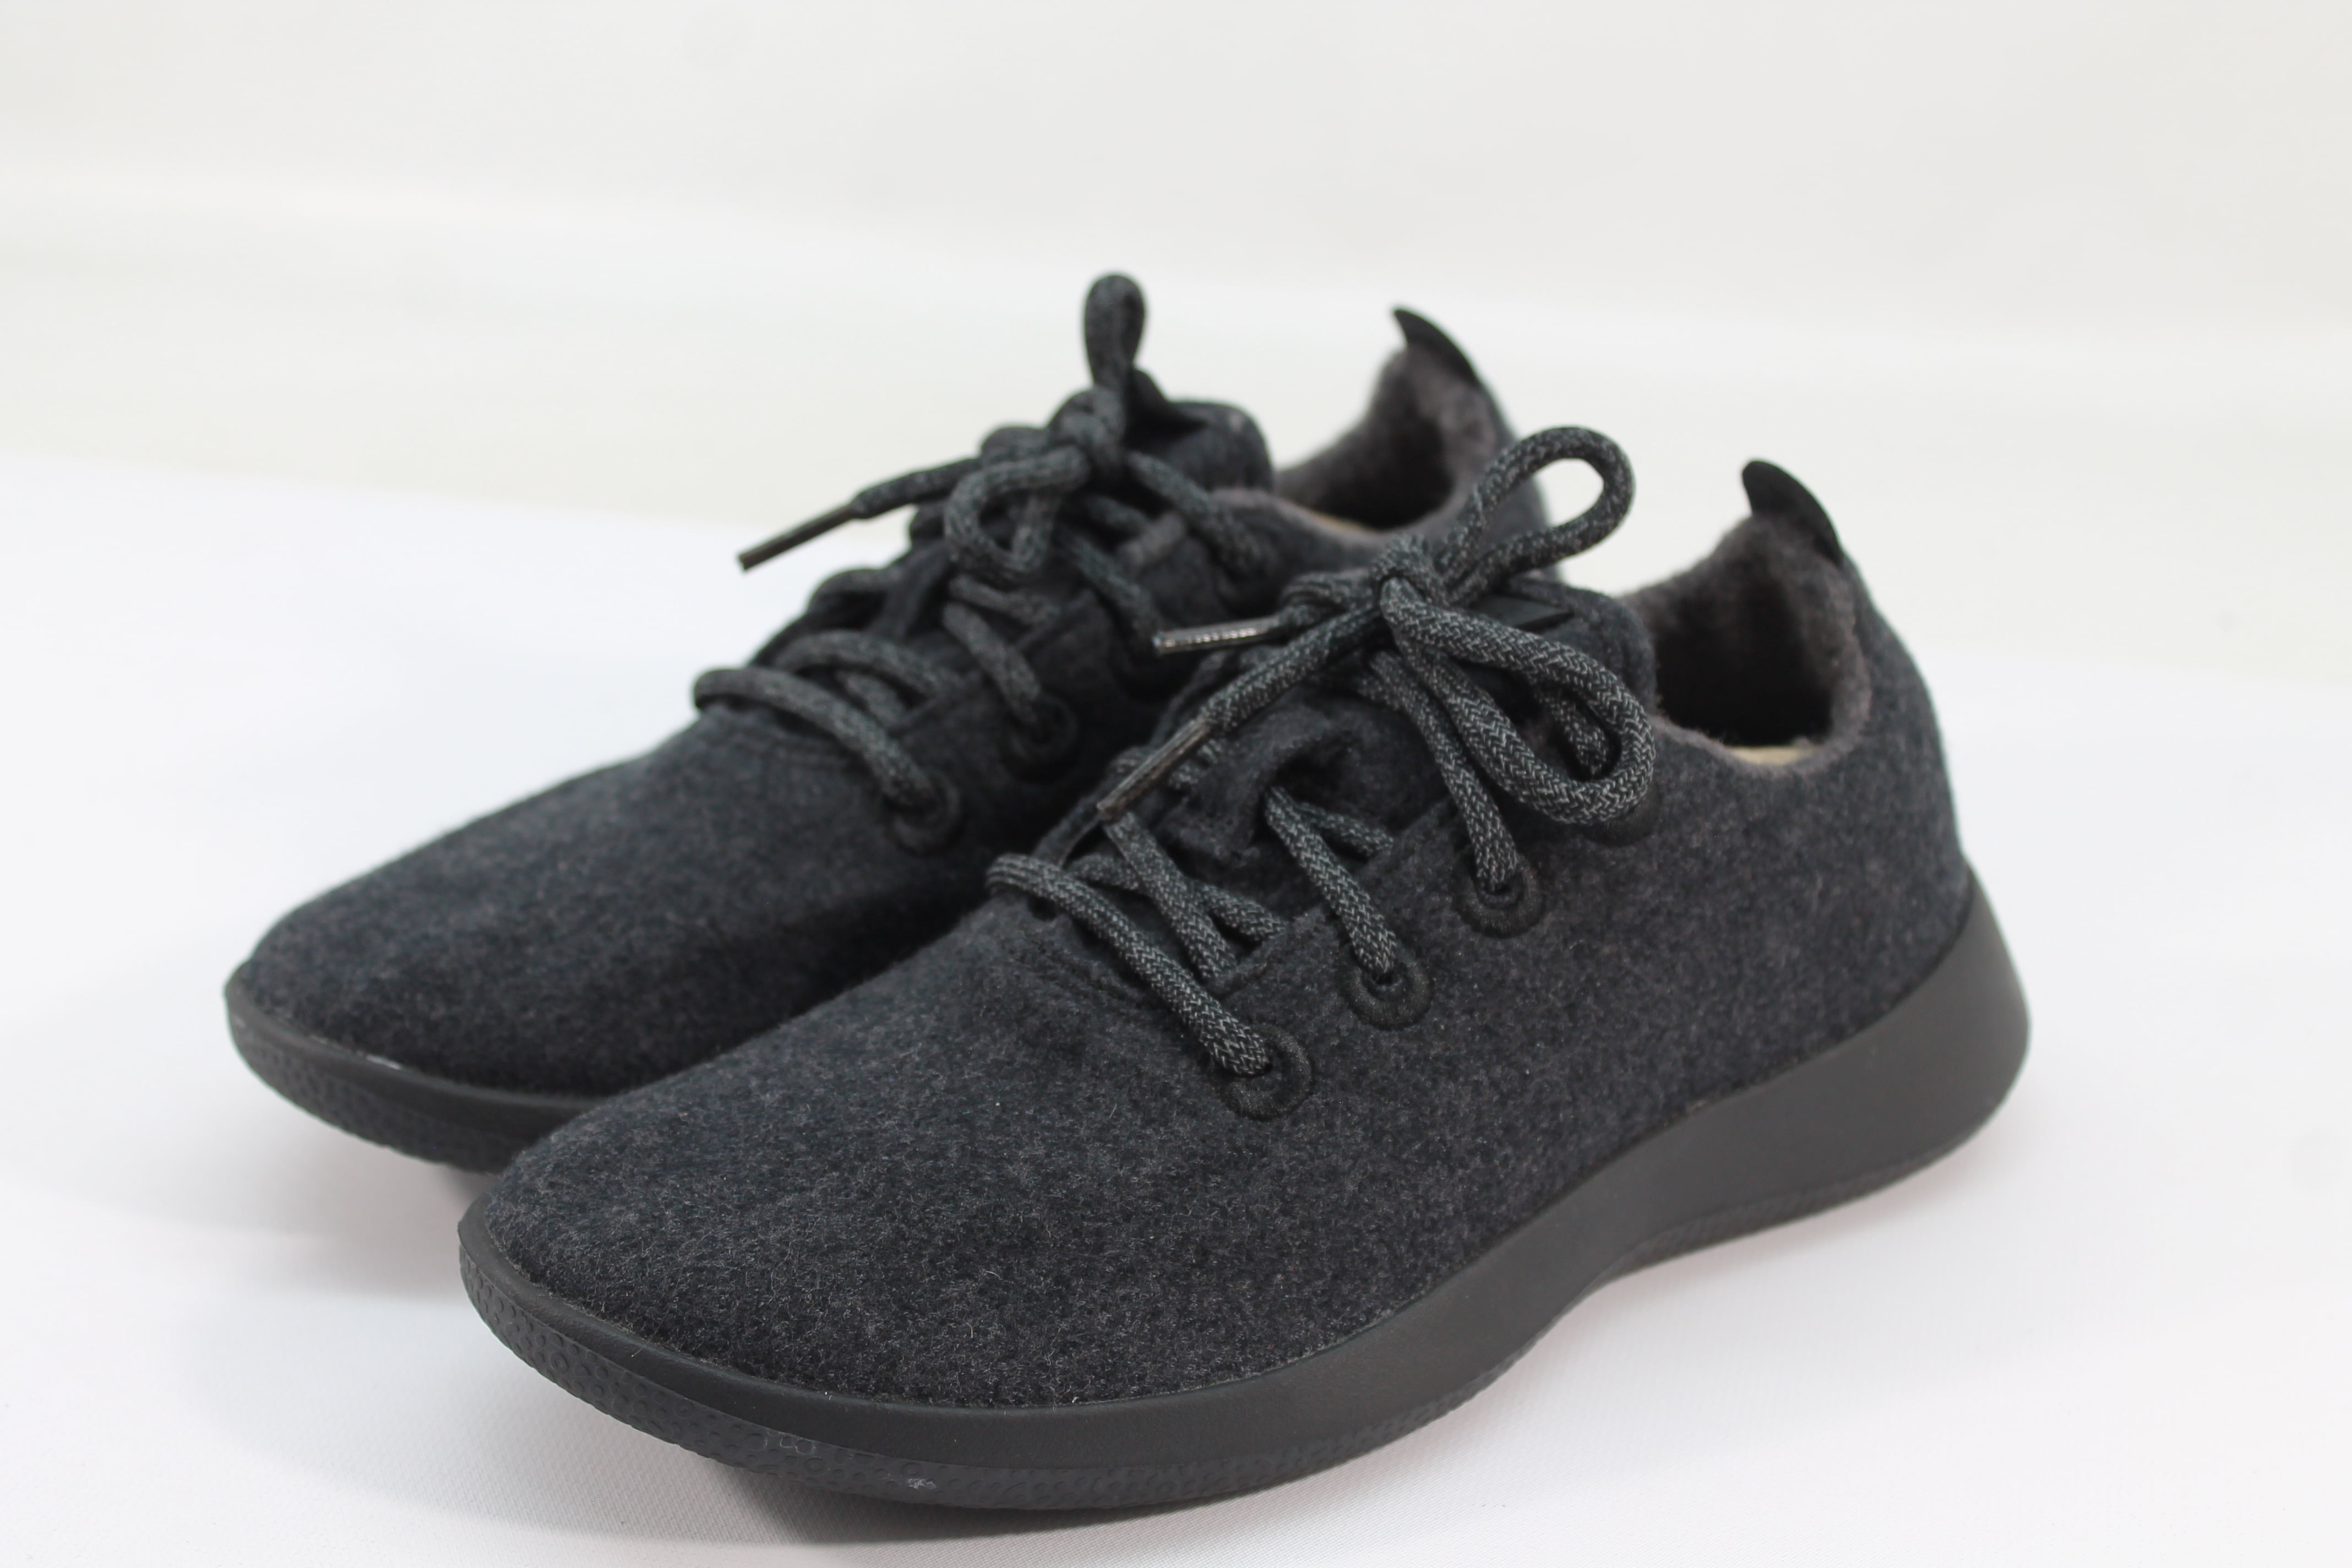 Allbirds Men's Wool Runners Natural Black/Black Sole Comfort Shoes FLSAMP 